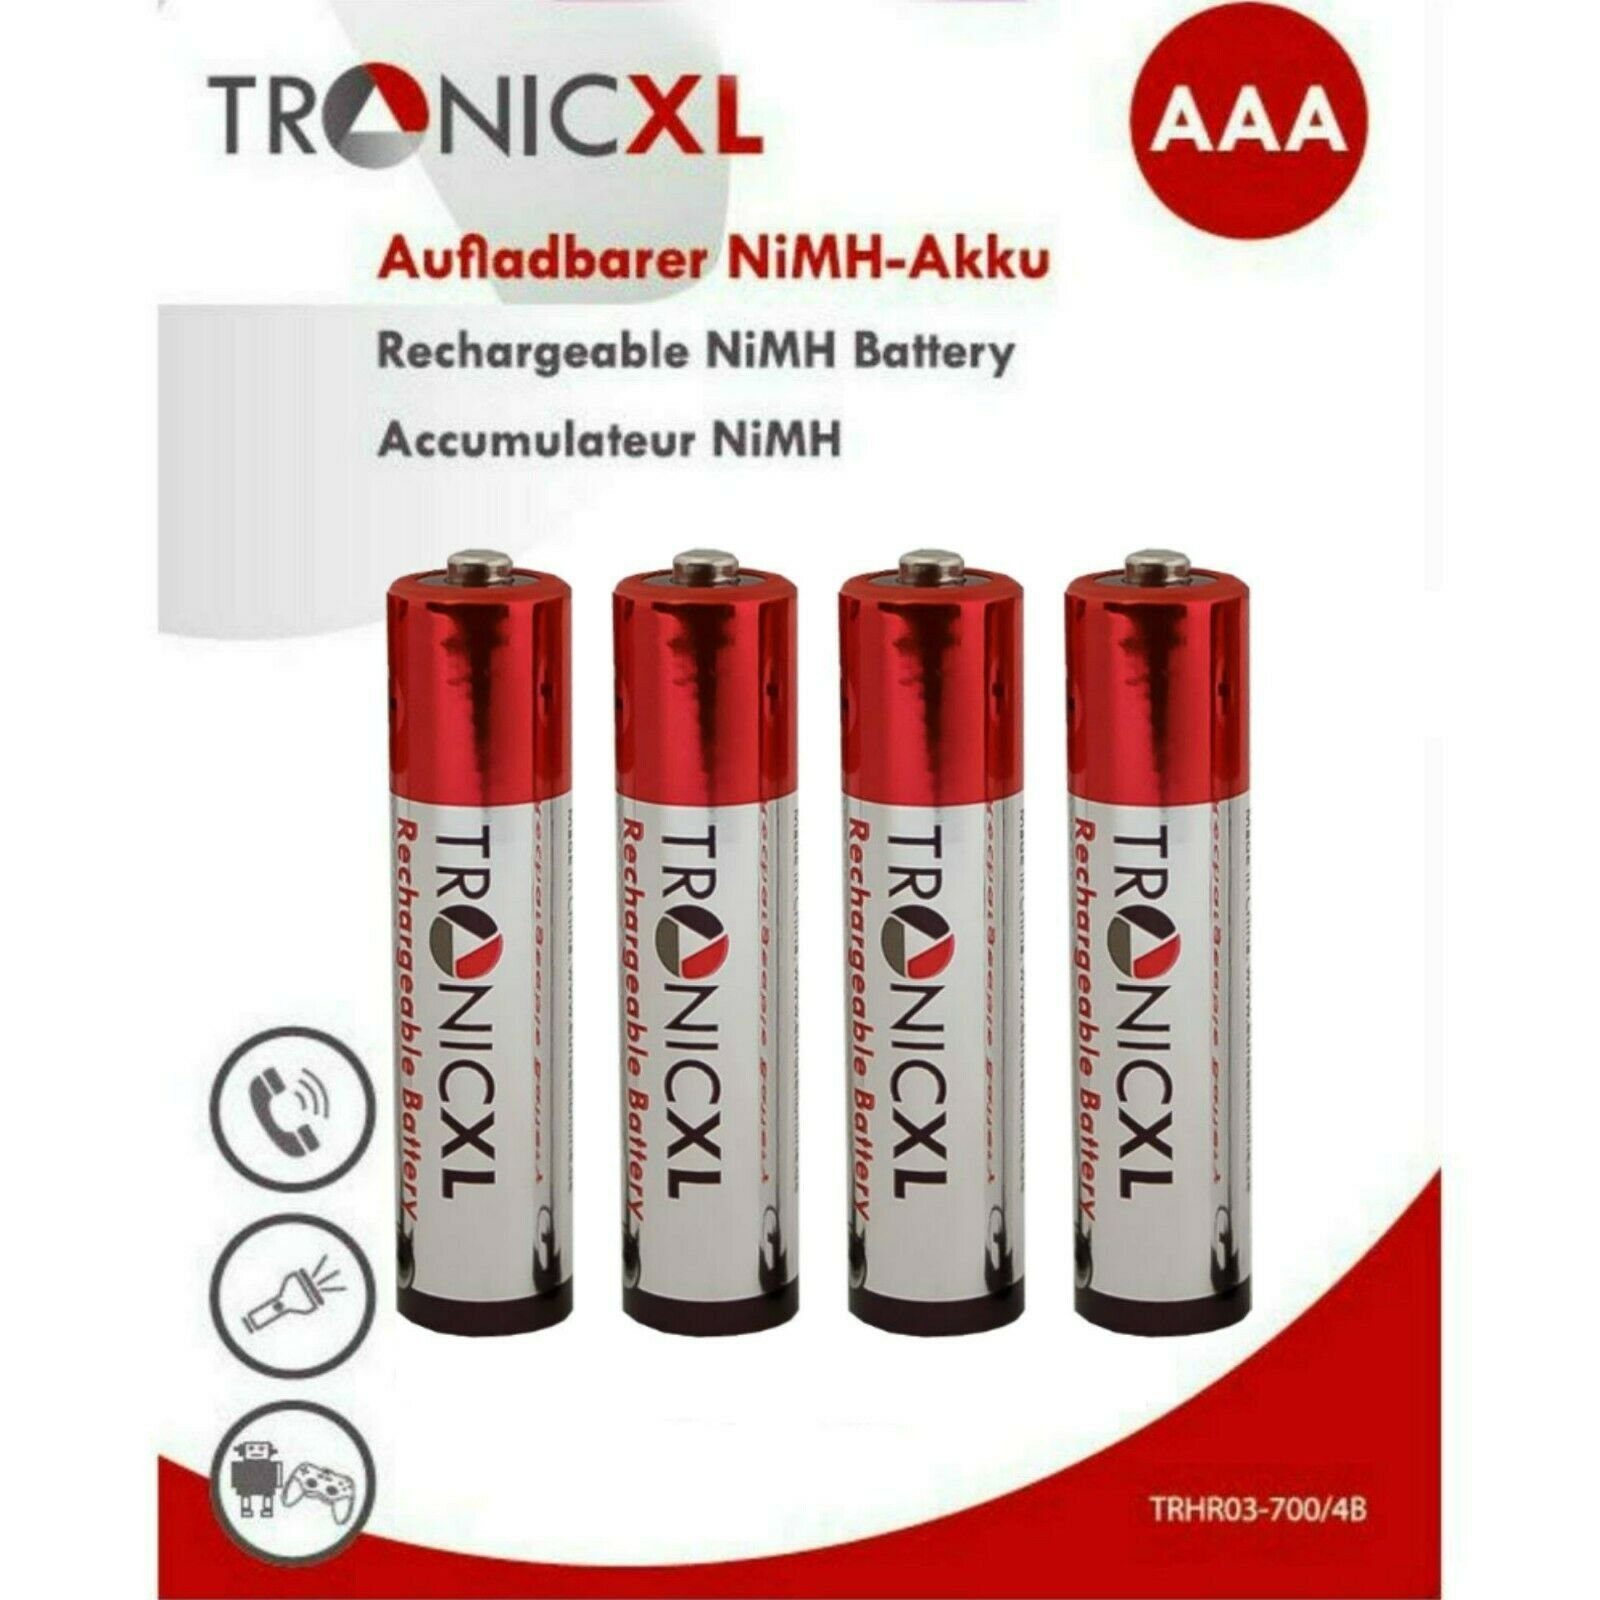 TronicXL Akkus AAA Akku für Telefon Telekom Sinus 406 502 502i 503 503i 605 606 Batterie